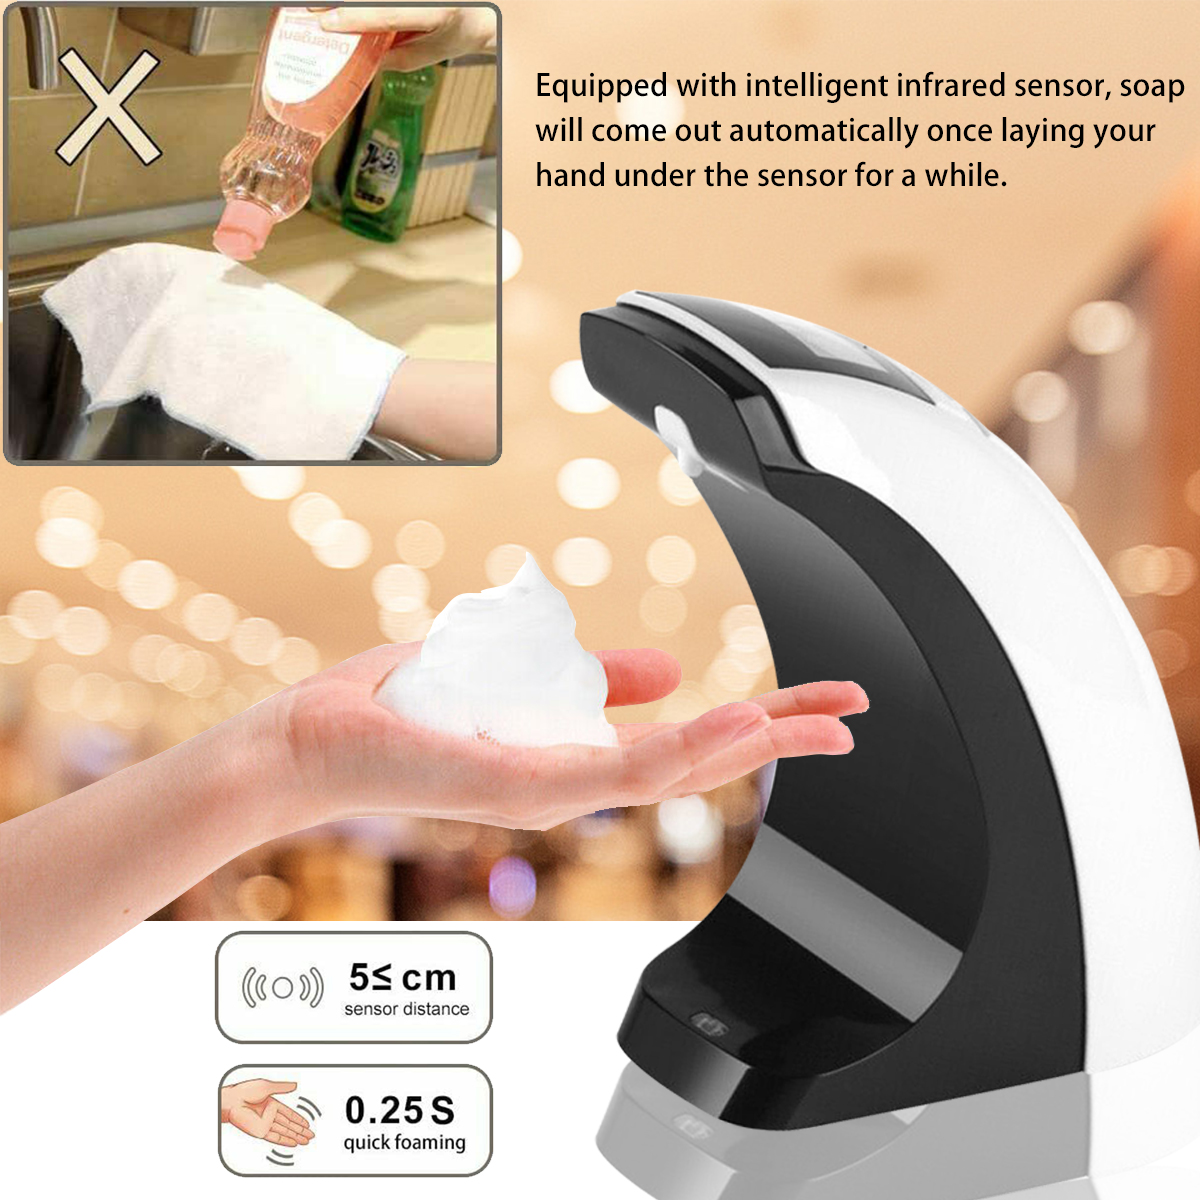 Bakeey-Automatic-Soap-Dispenser-IR-Sensor-Shampoo-Liquid-Foam-Hand-Wash-System-300ml-1800575-5